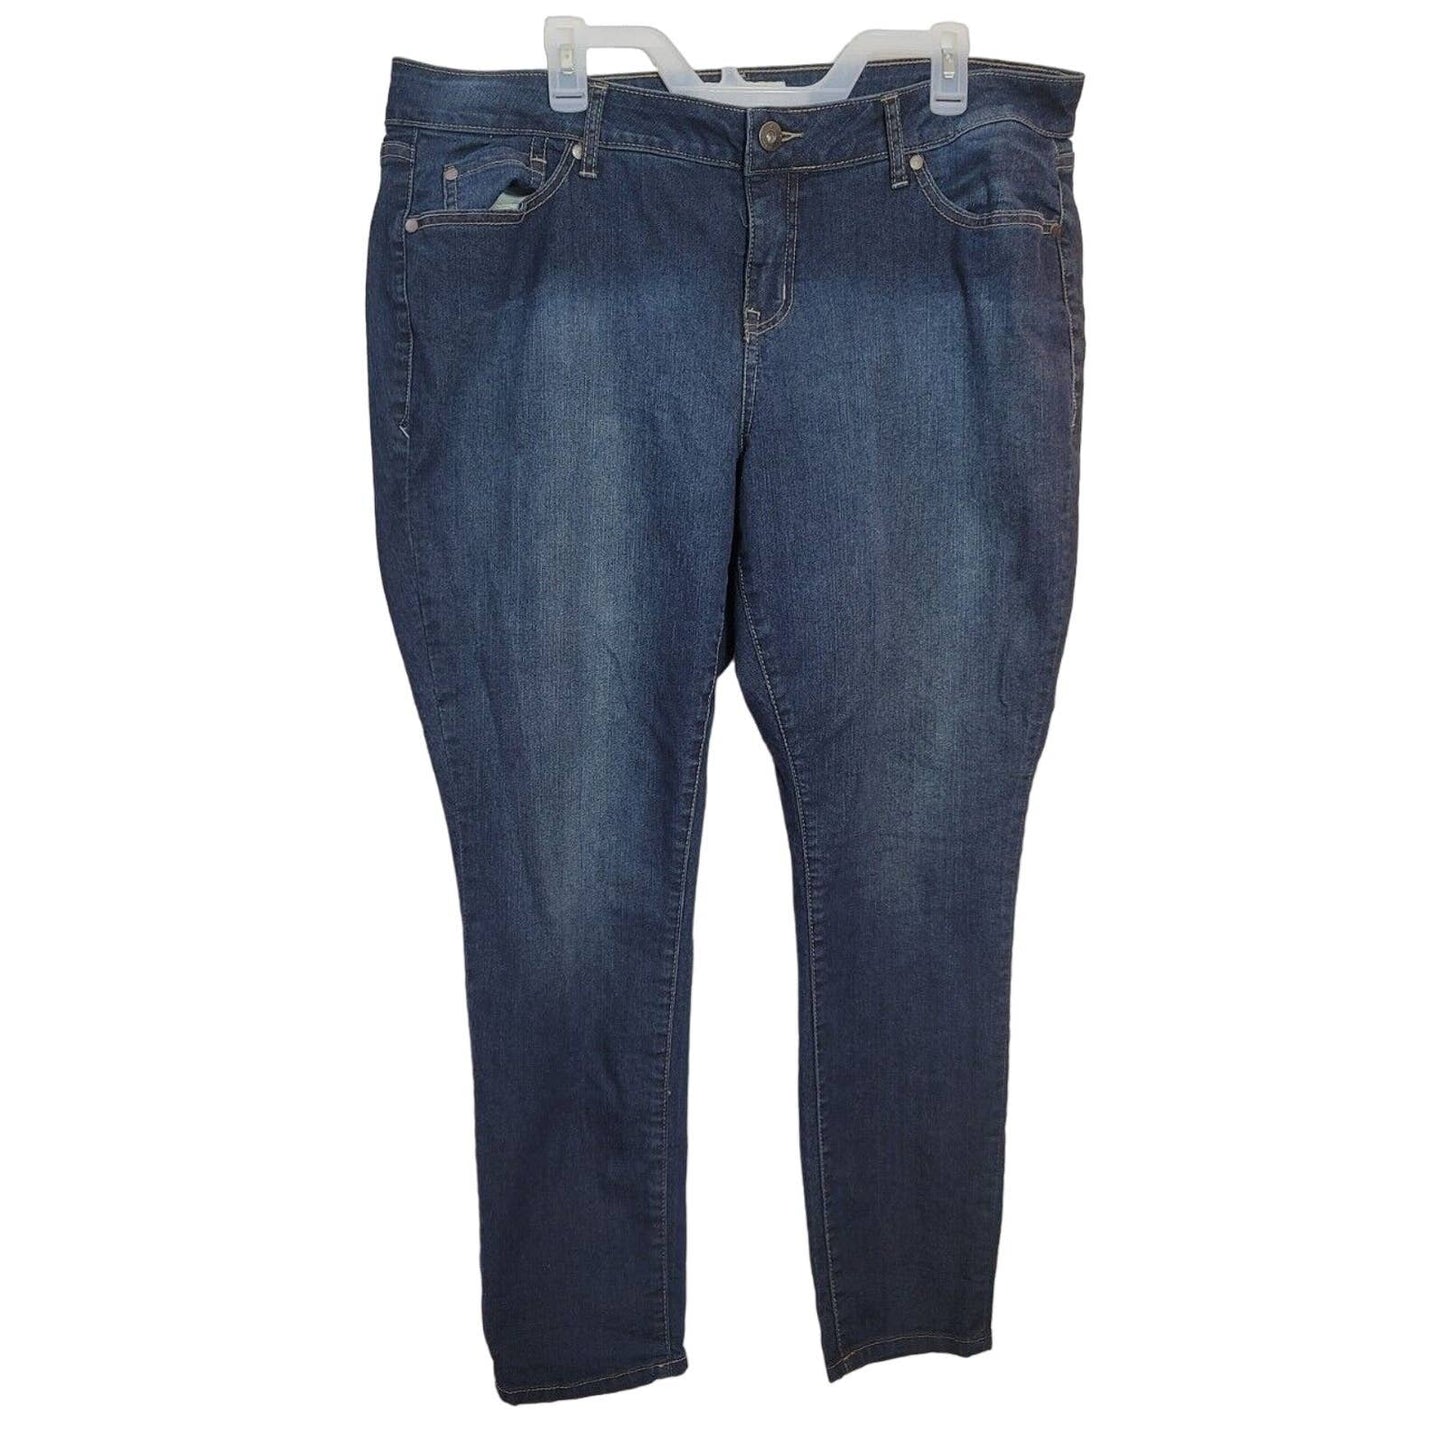 Torrid Jeans Skinny Dark Wash Stretch Plus Size 18S Short